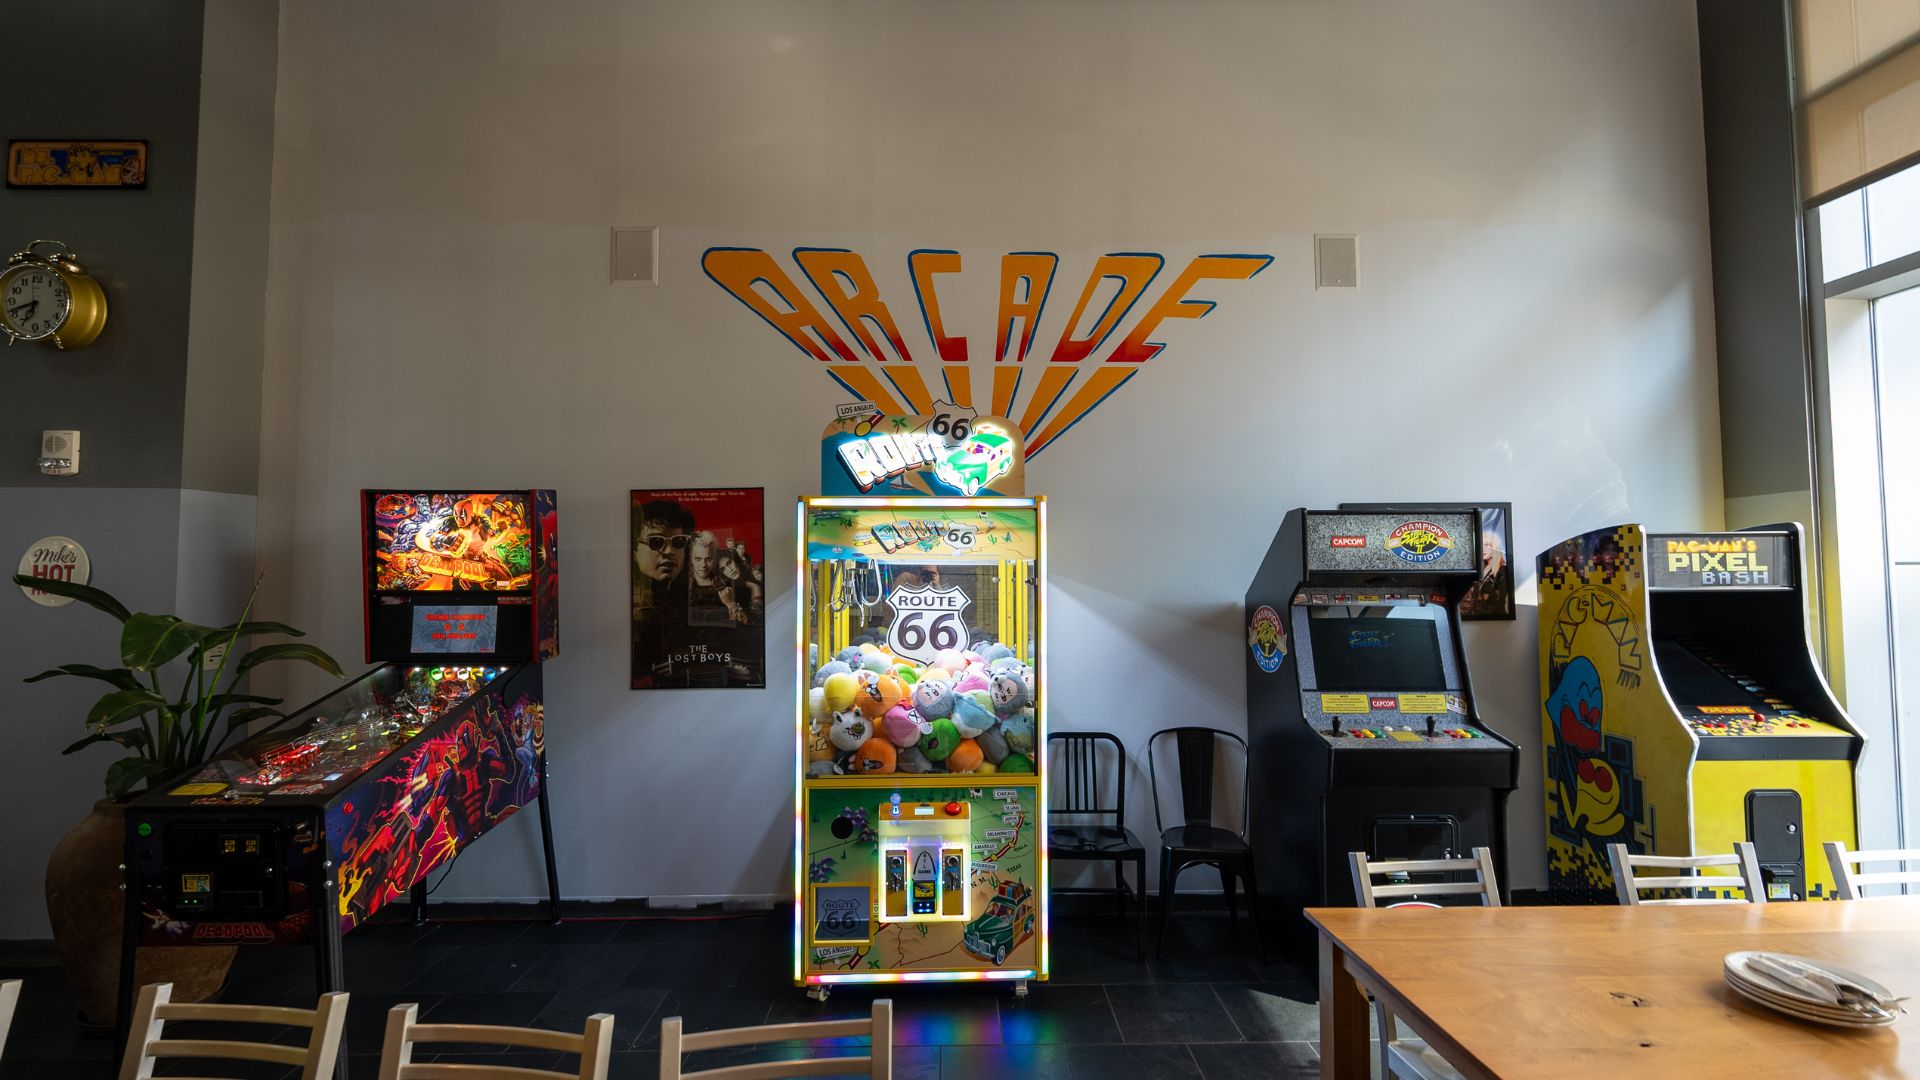 An arcade provides endless entertainment.